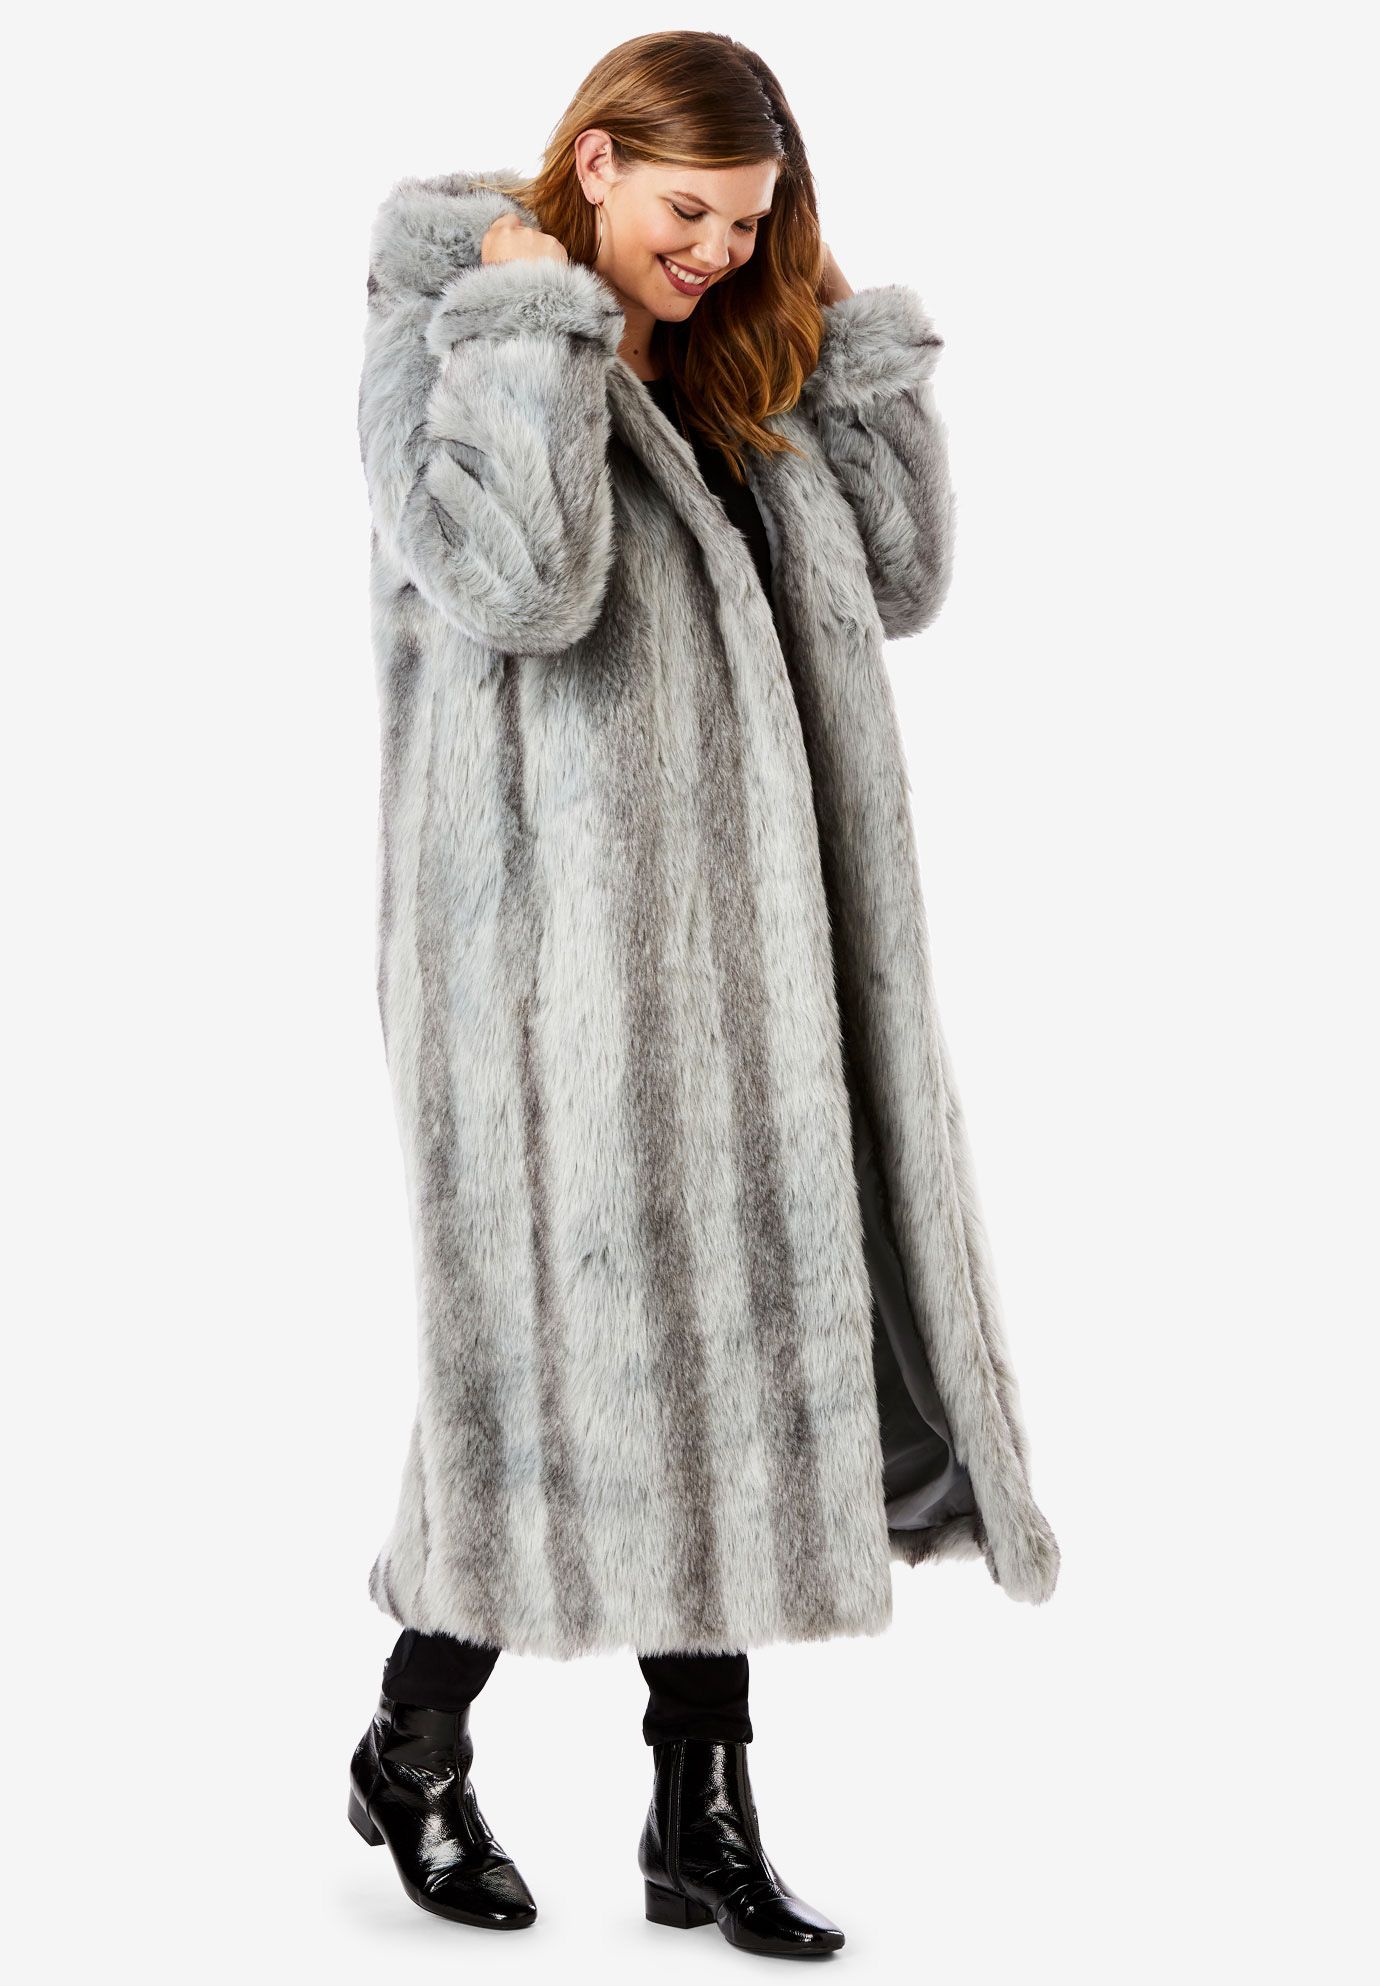 21 Best Plus Size Coats 2020 The, Women S Plus Size Tall Winter Coats